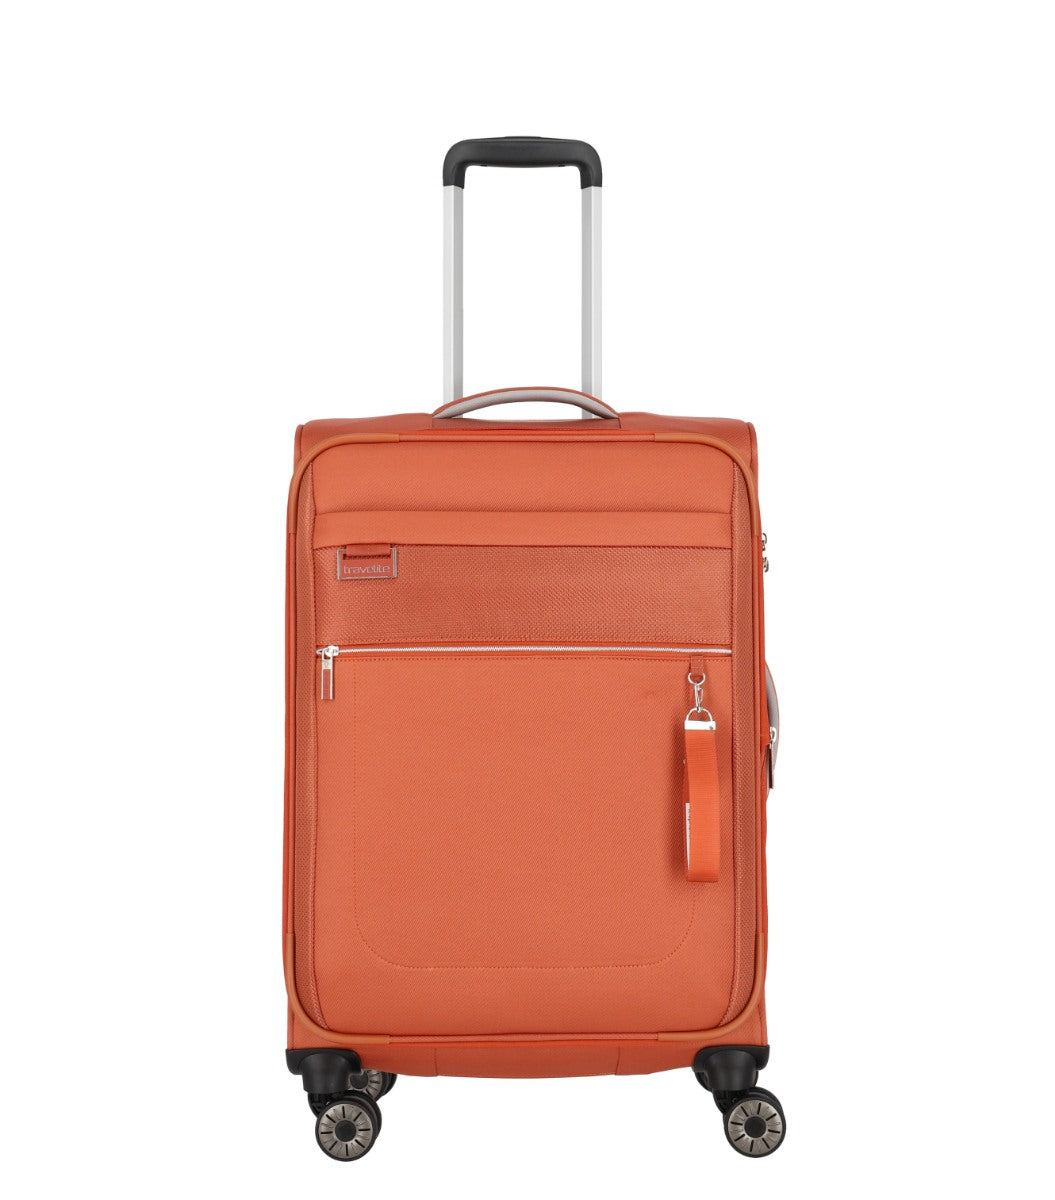 Billede af Travelite Miigo Orange Kuffert - Mellem - 67 cm